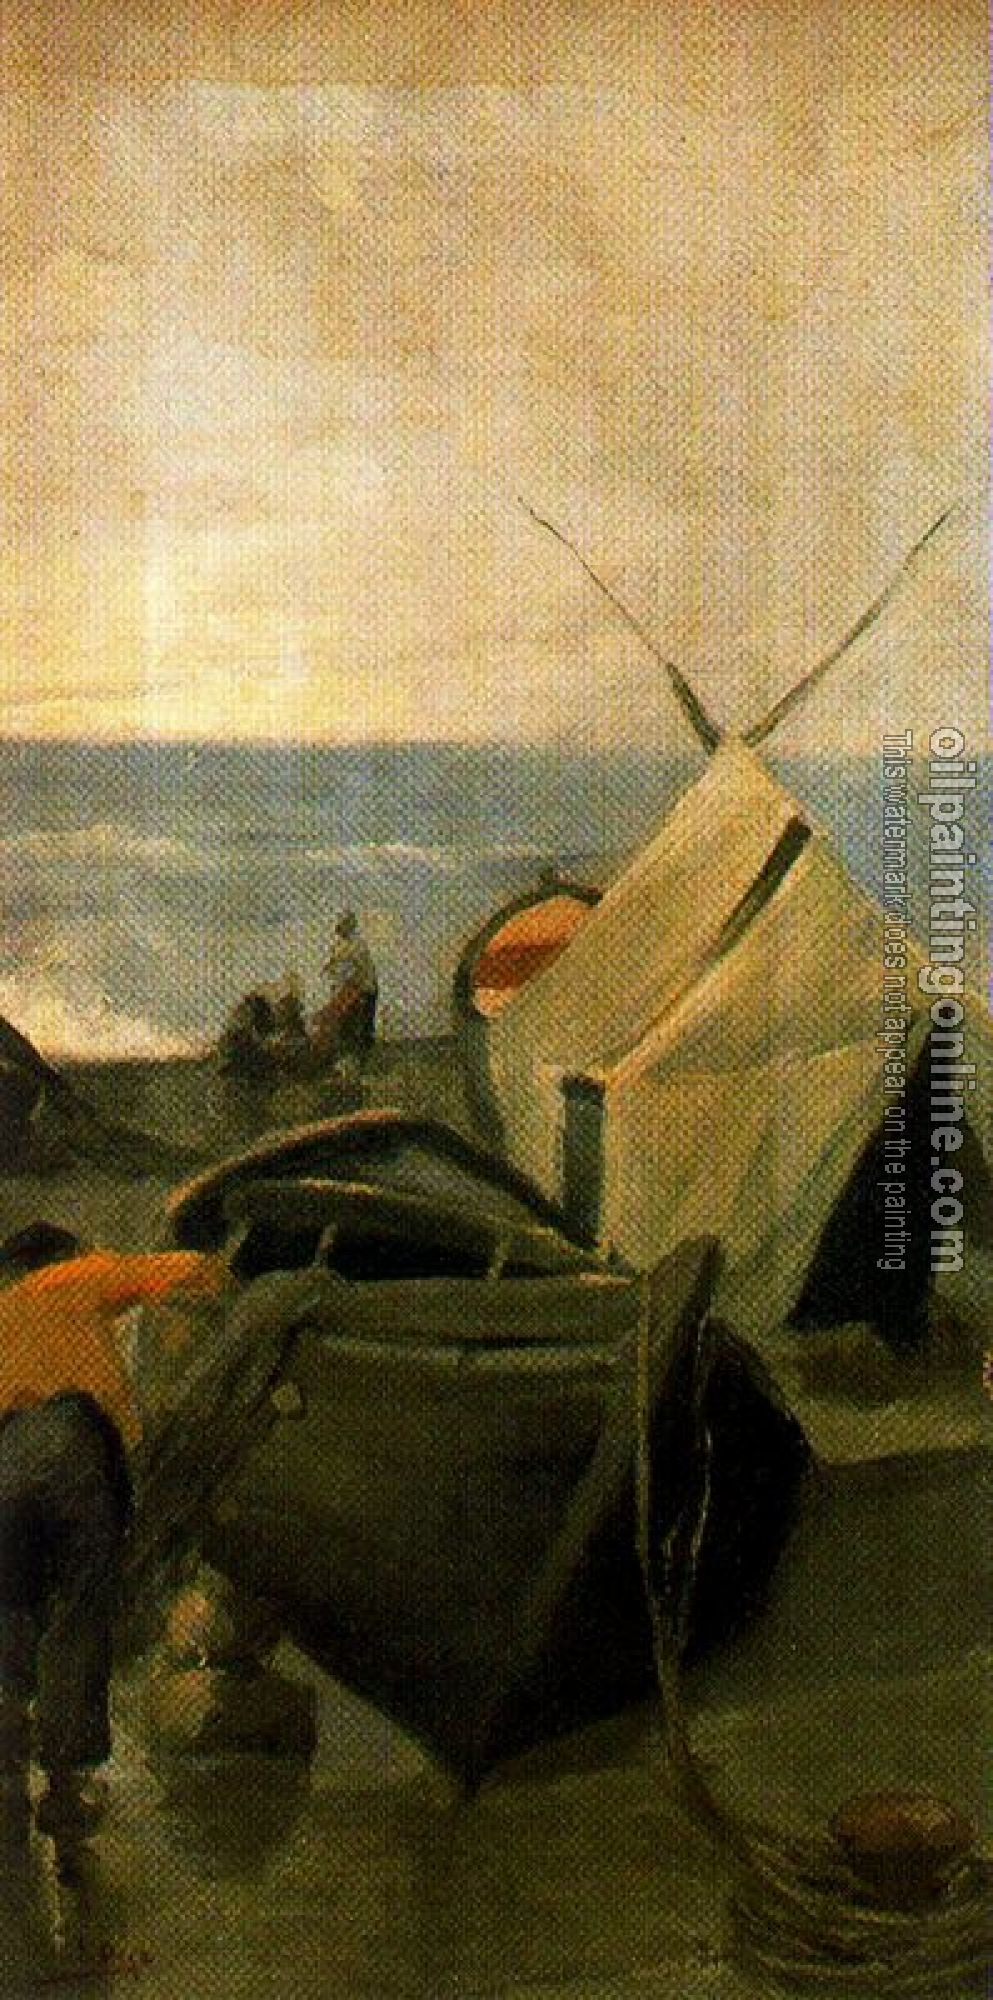 Ignacio Diaz Olano - Limpiando barcas